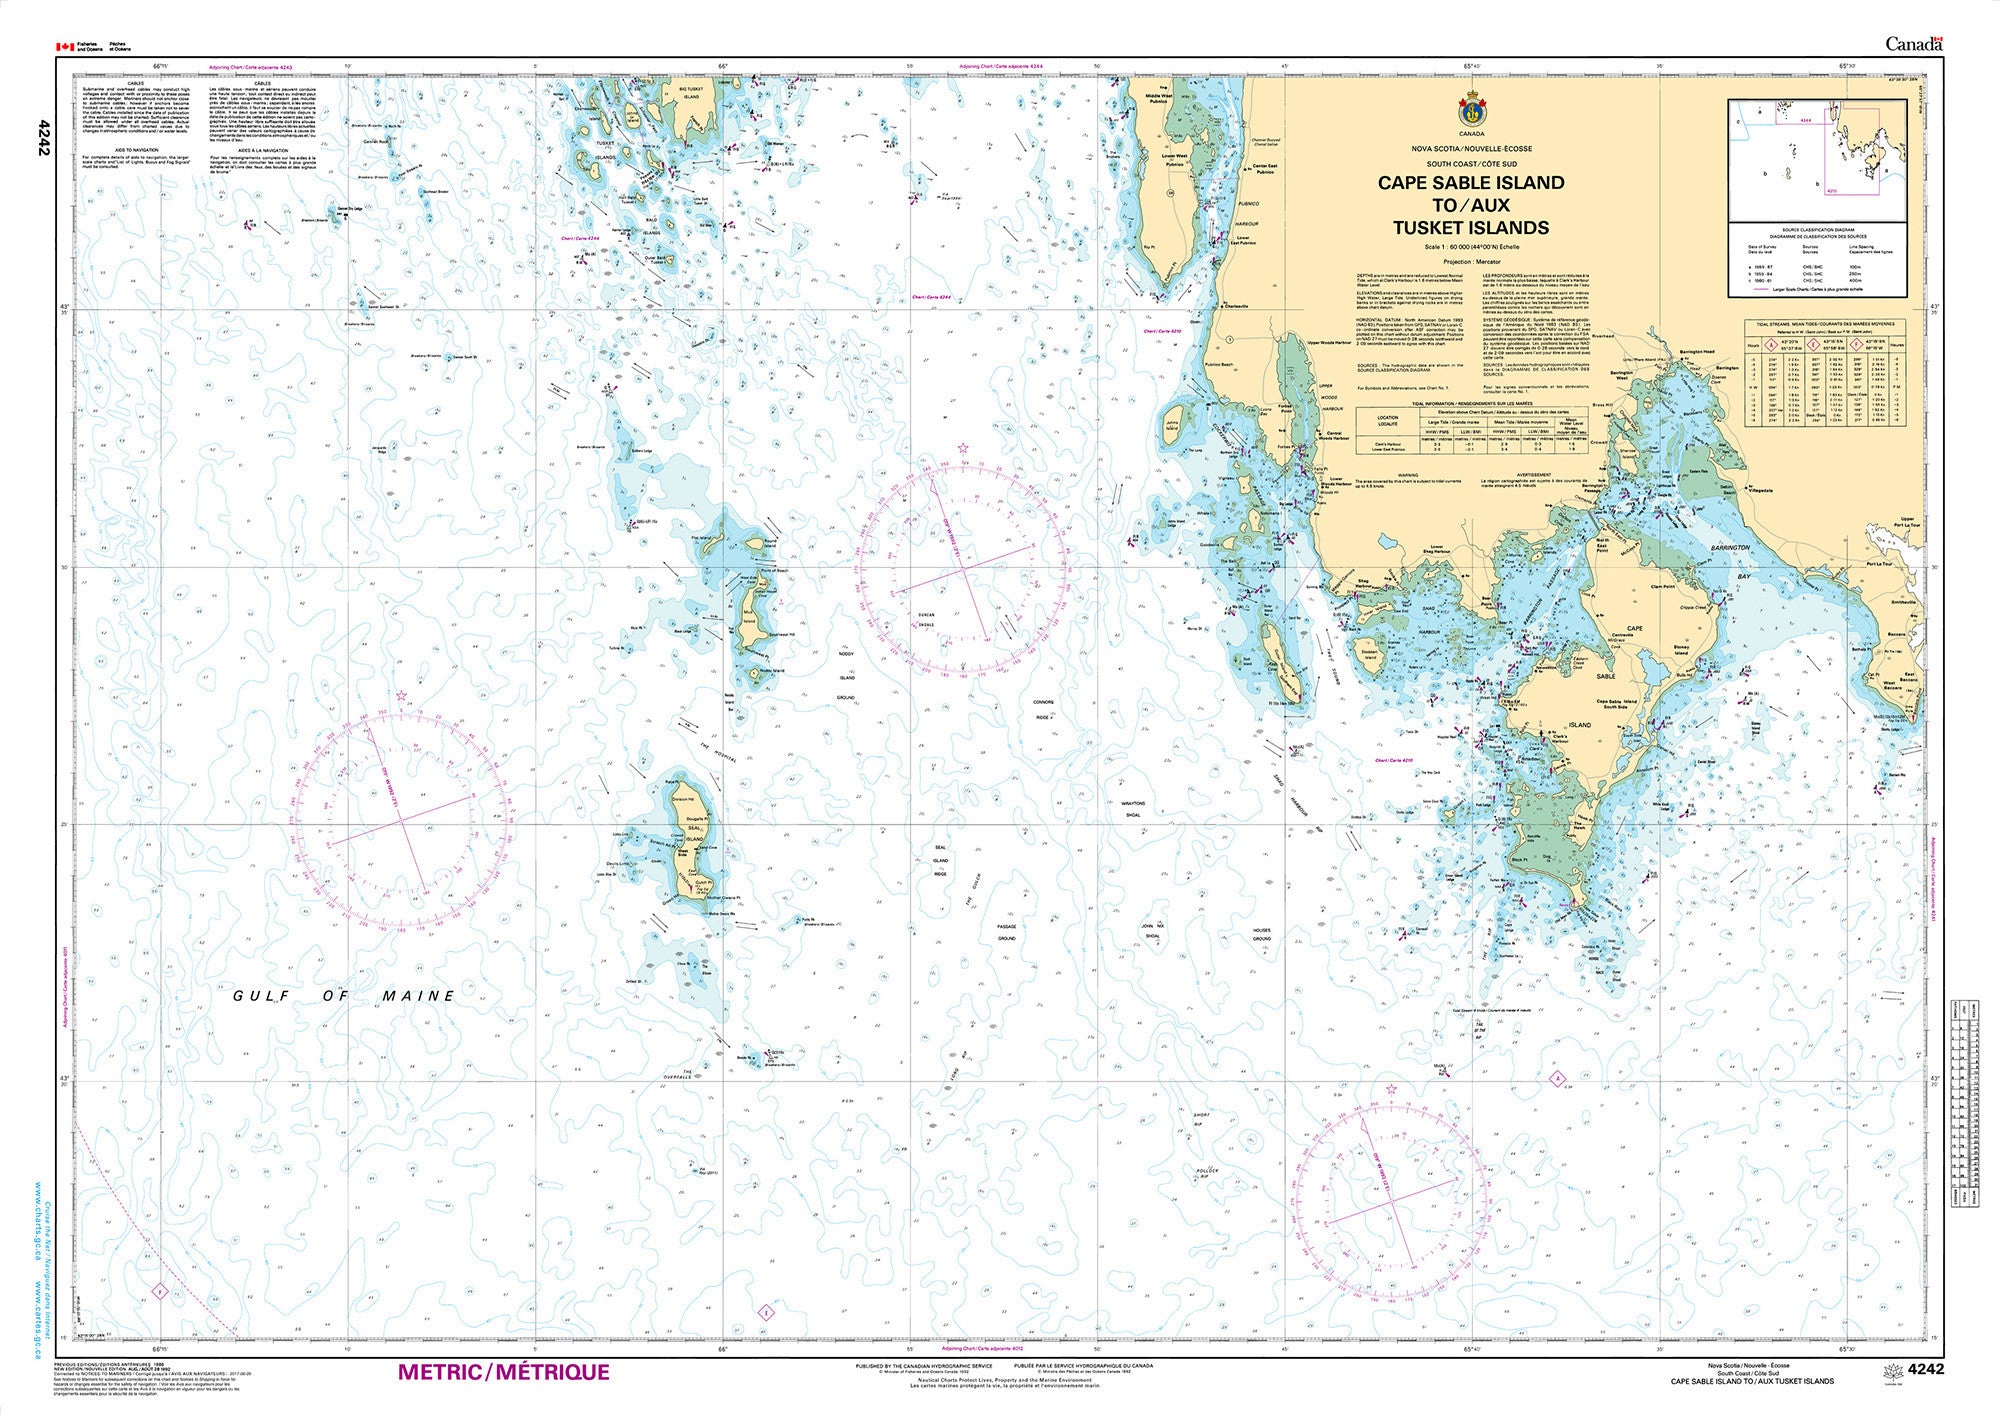 Canadian Hydrographic Service Nautical Chart CHS4242: CANADA NAV CHART $20